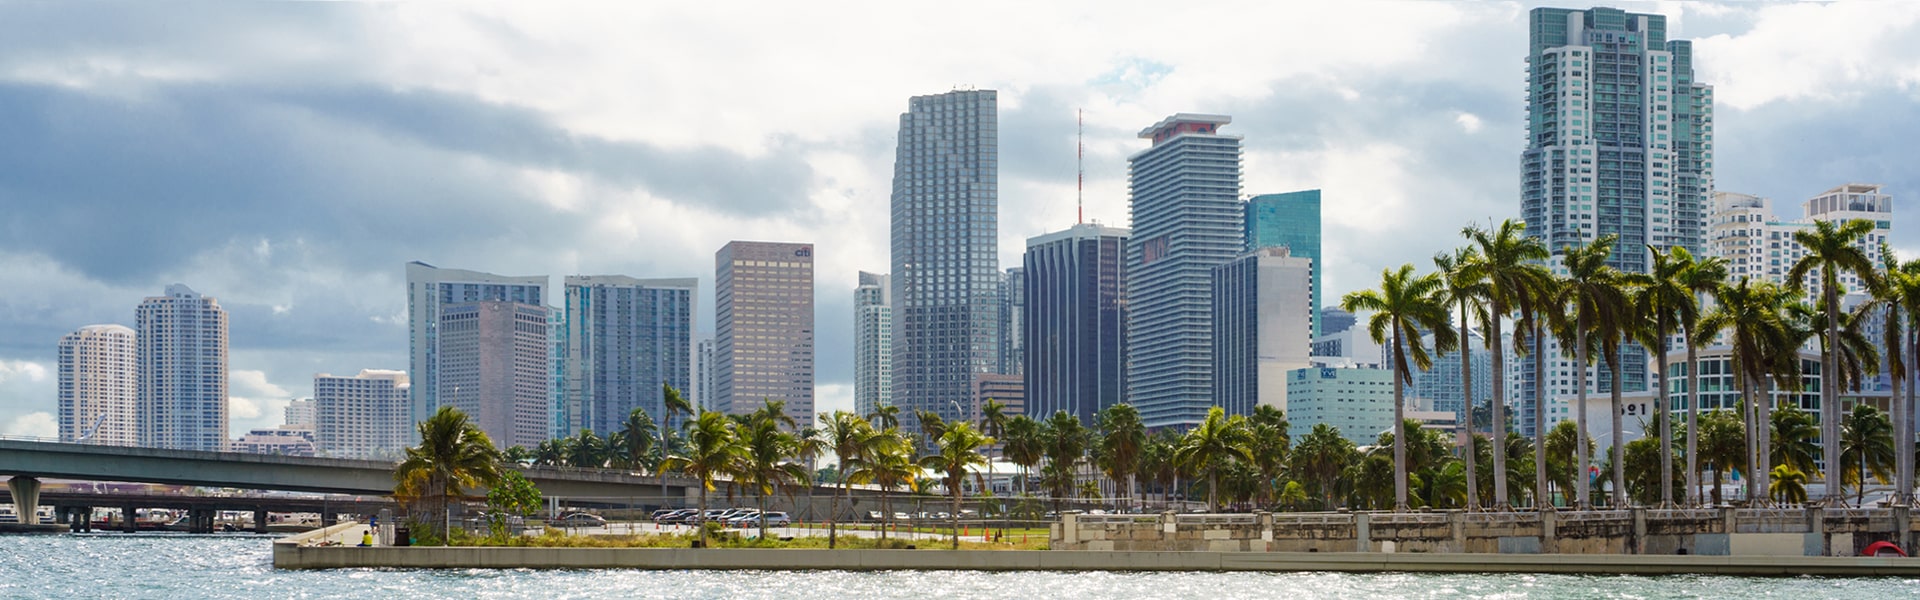 Miami Downtown Skyline, Florida, USA